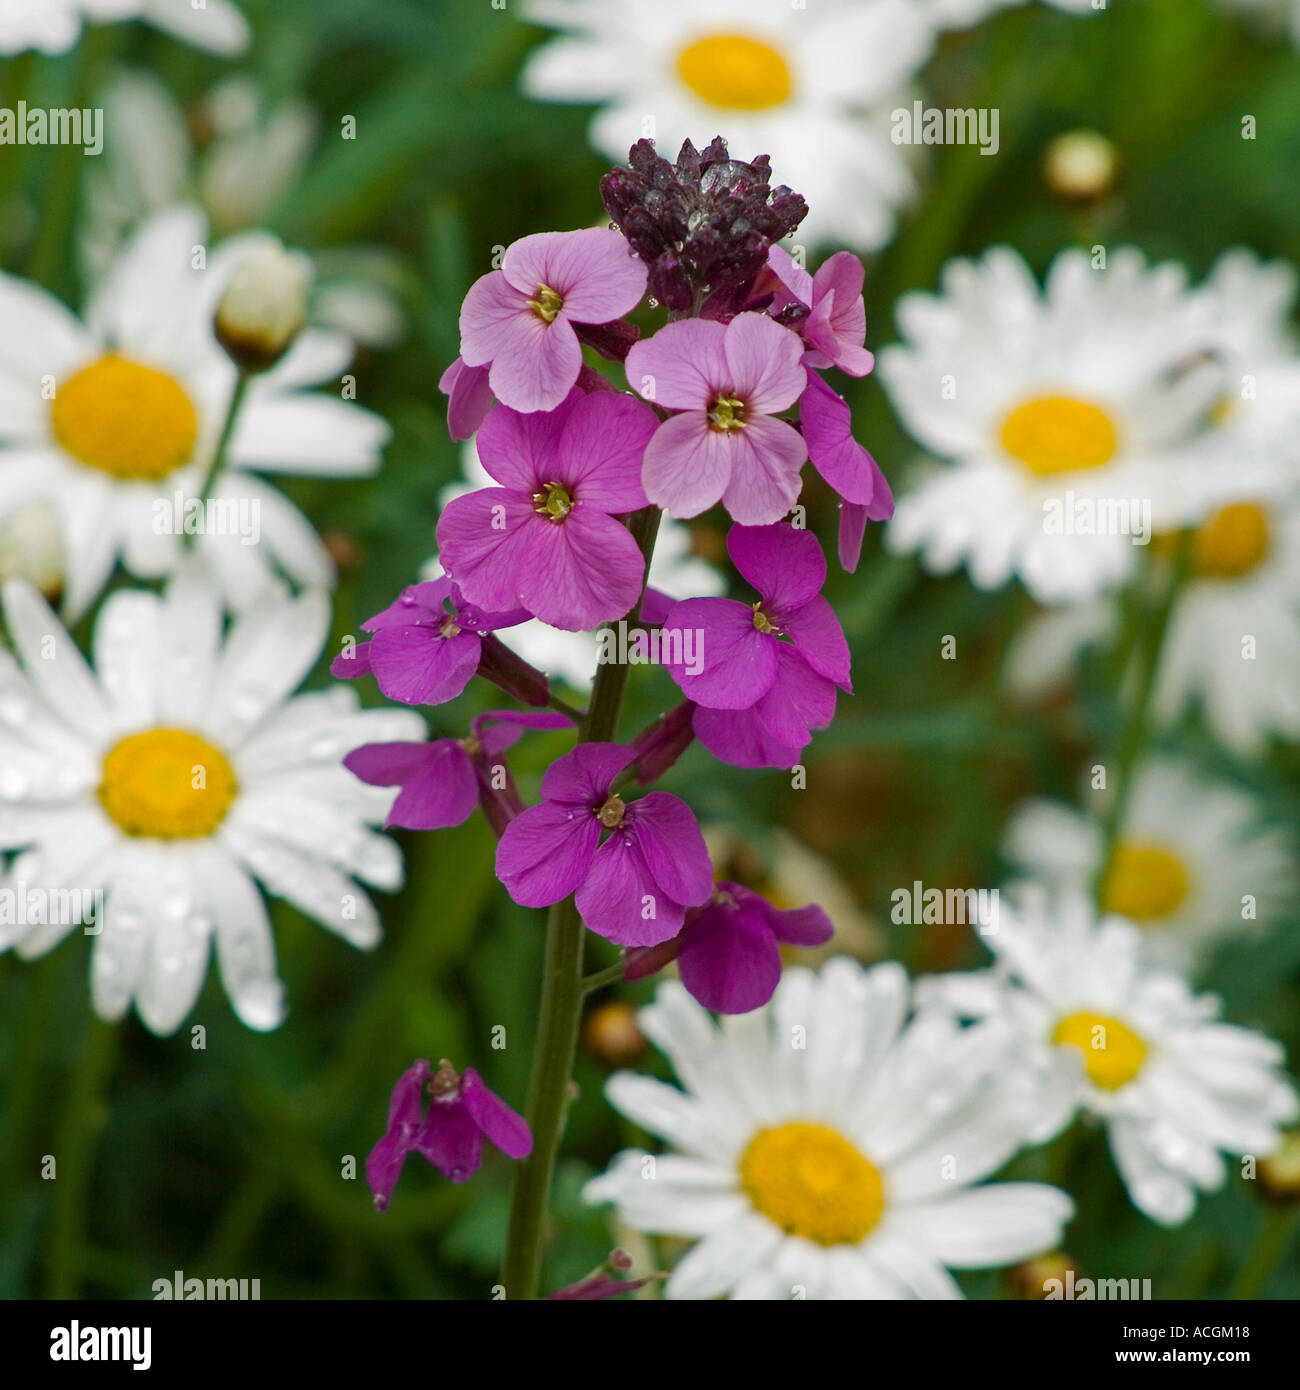 Erysimum linifolium Bowles Mauve amongst marguerites Stock Photo